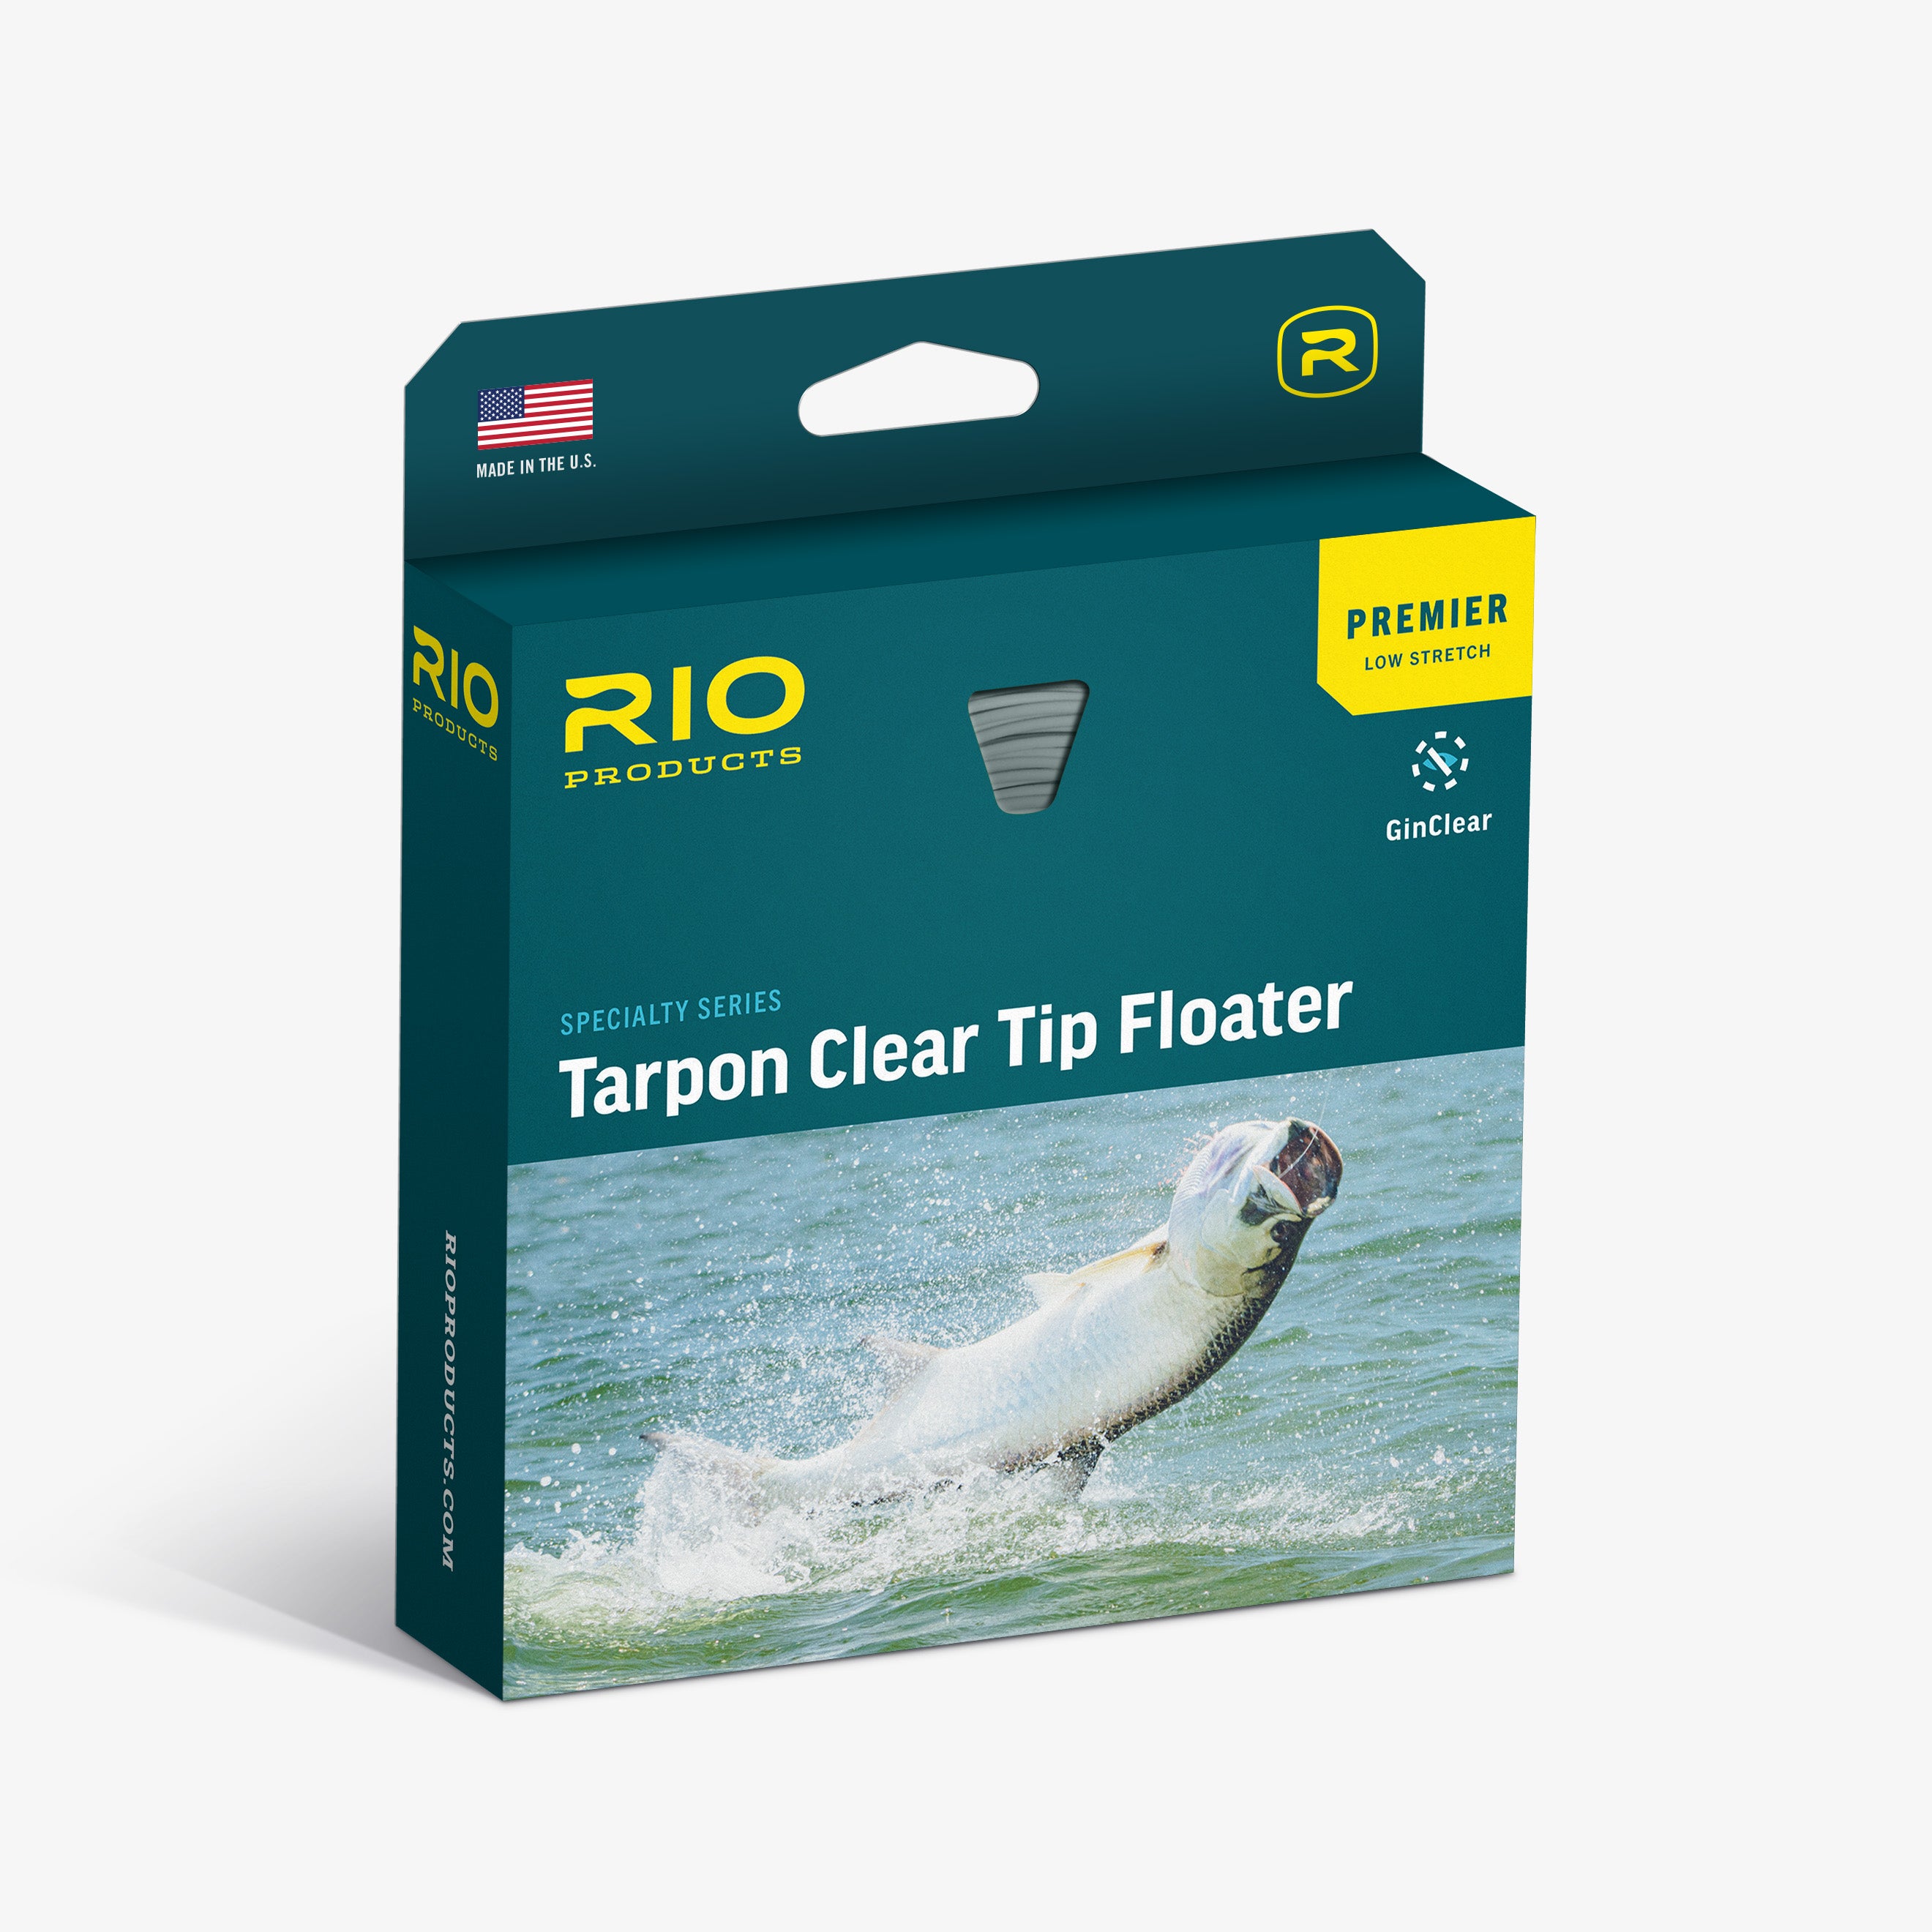 Premier Tarpon Clear Tip Floater Fly Line